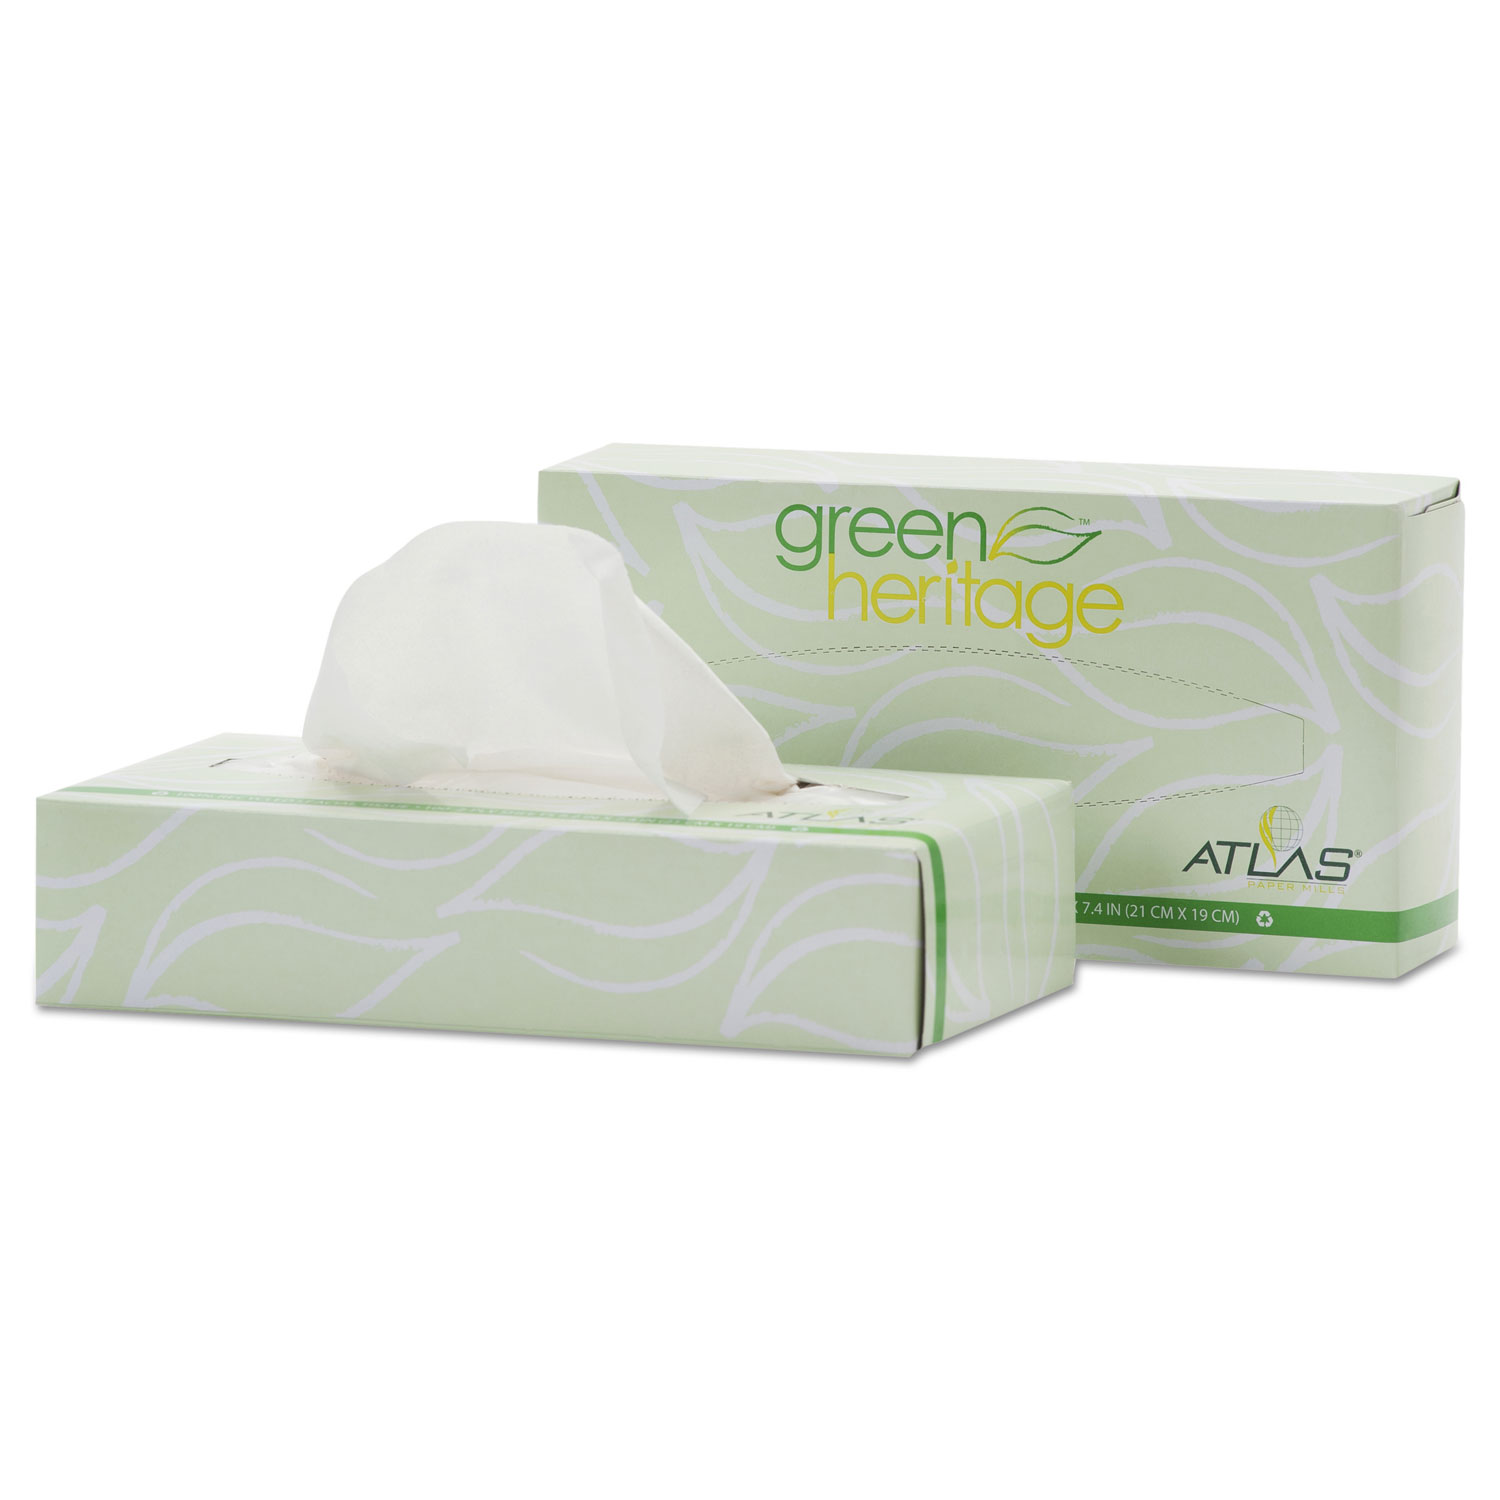 Green Heritage Professional Facial Tissue, 2-Ply,7 4/5 x 8, 100/Box, 72 Box/CT